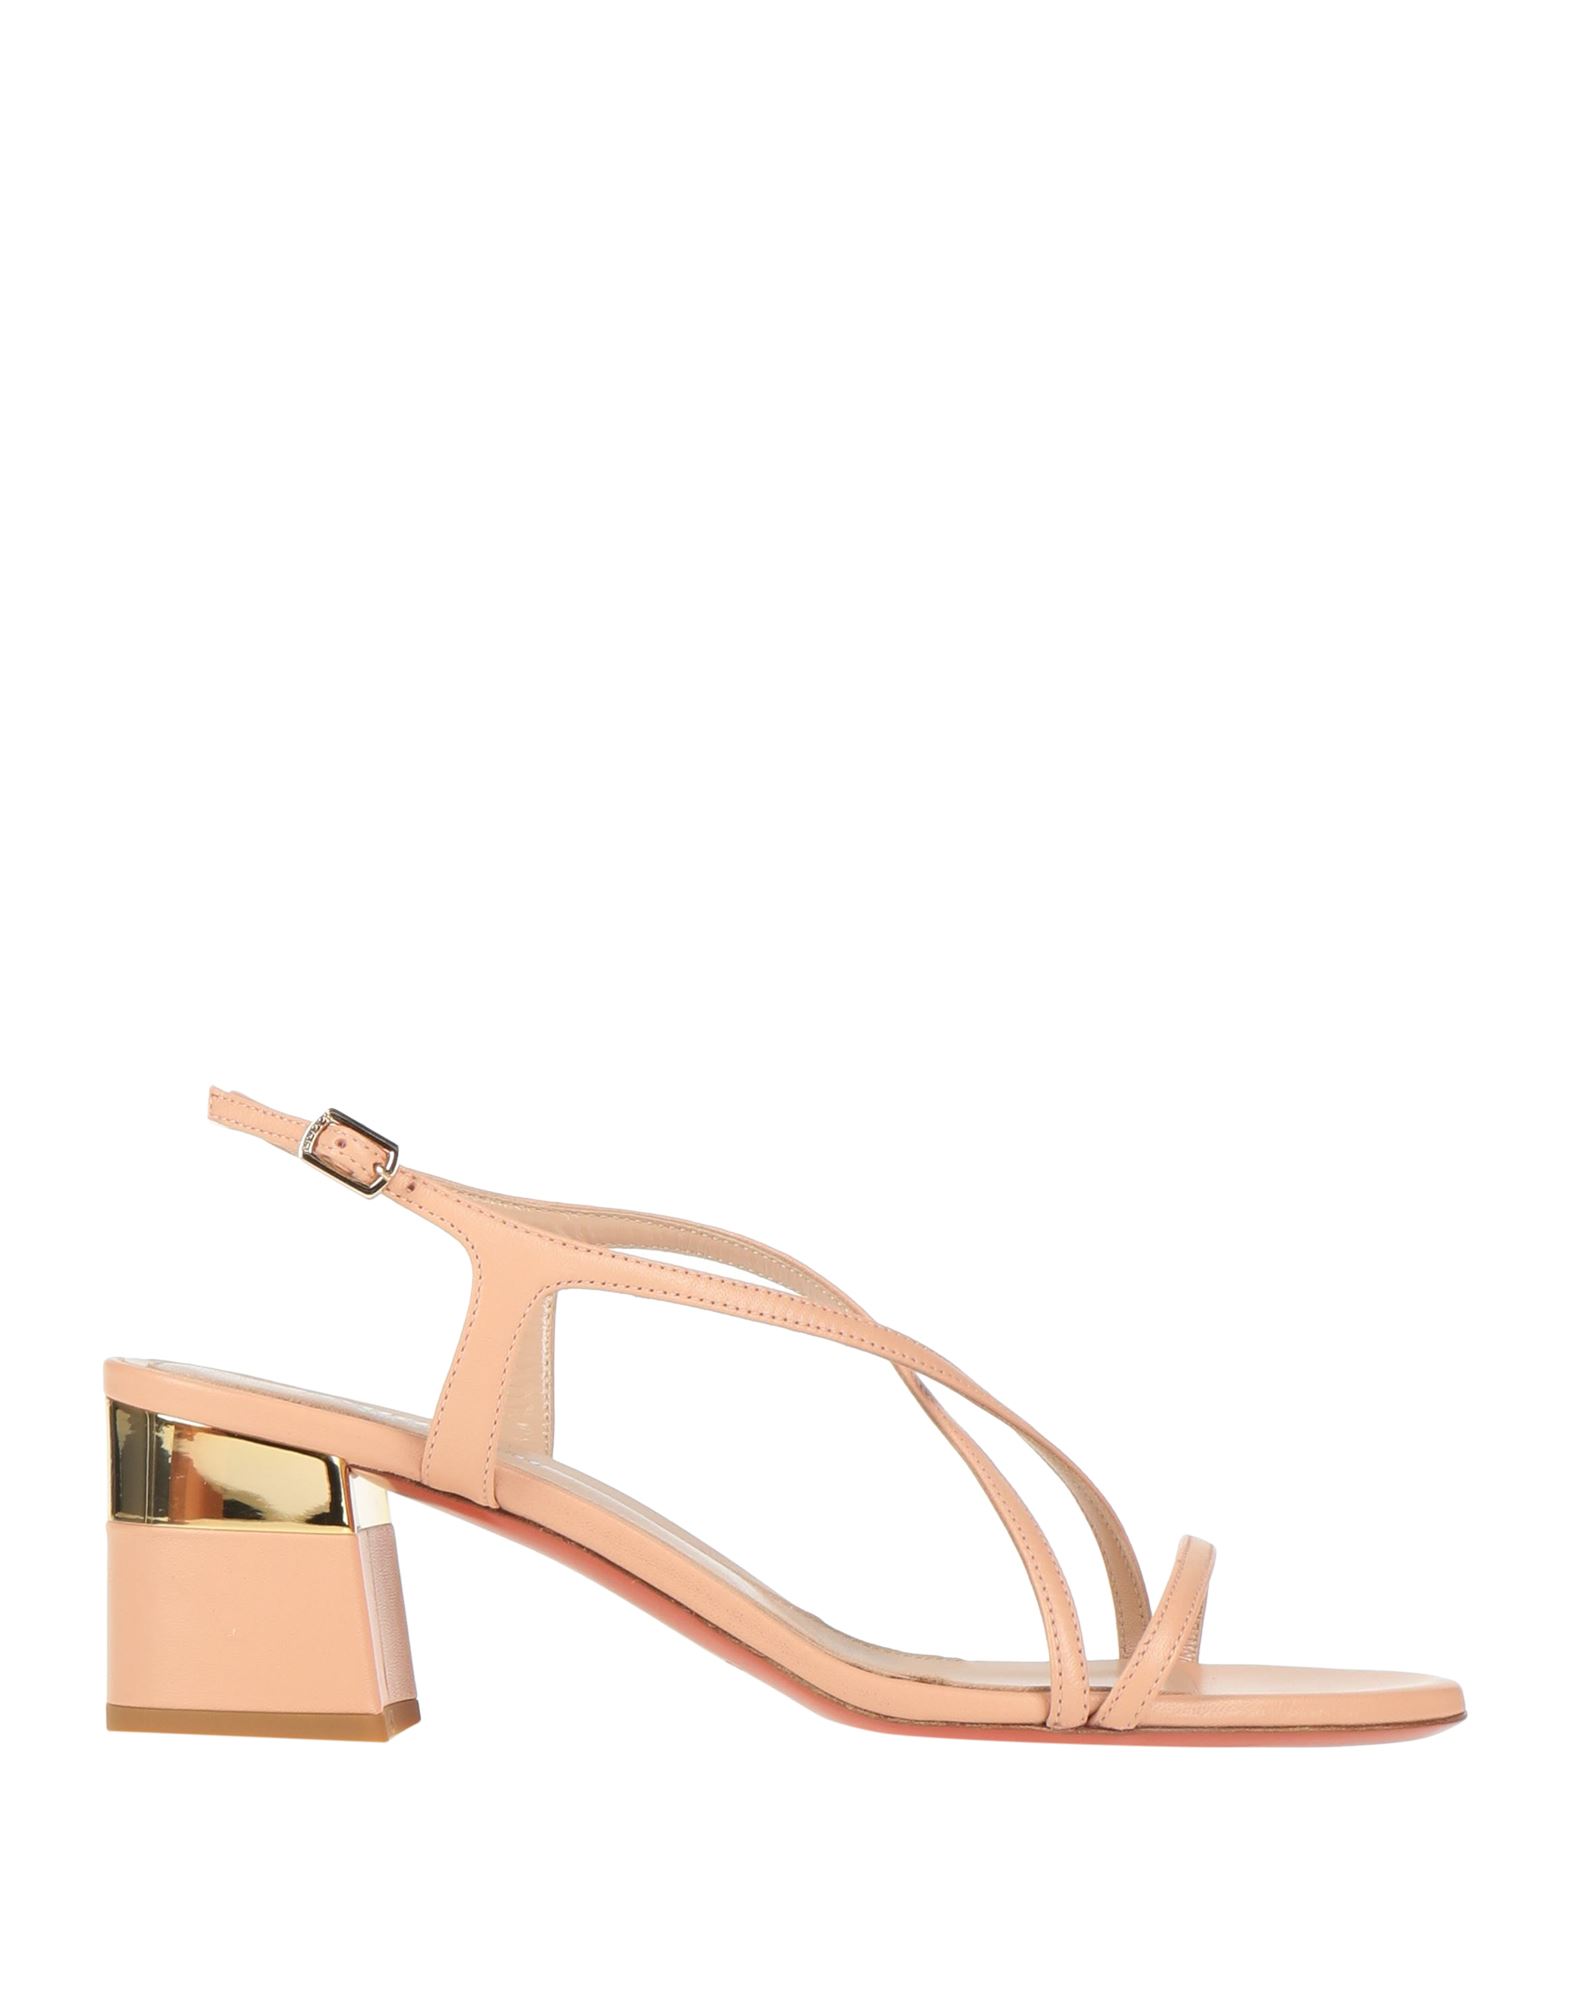 Shop Baldinini Woman Sandals Light Pink Size 6.5 Soft Leather